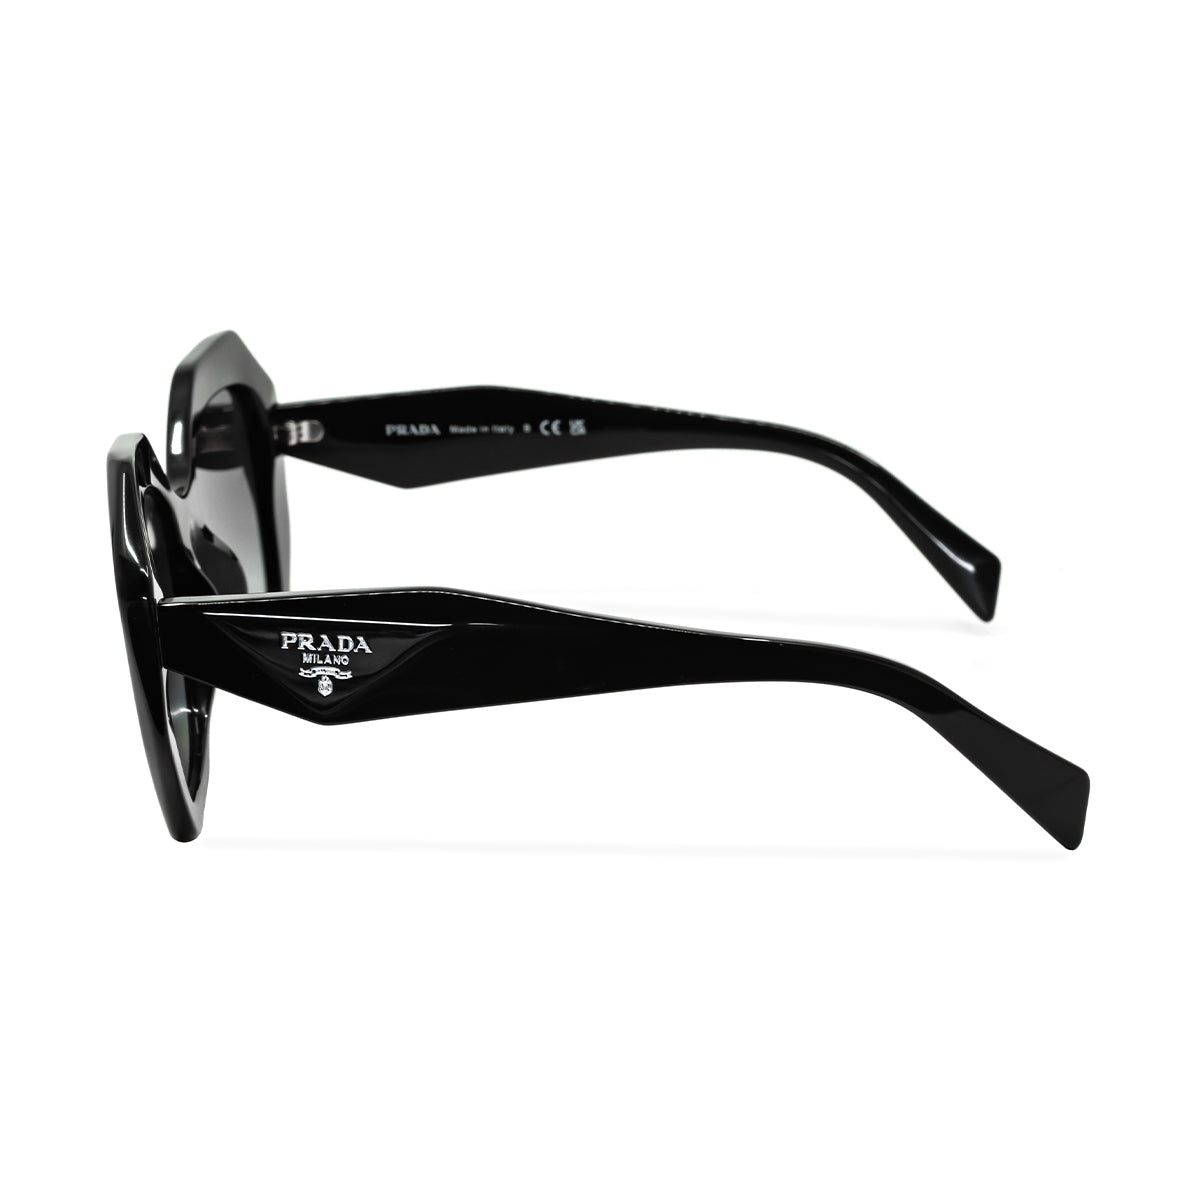 Narrow rectangular sculpture sunglasses PRADA Runway SPR 17W col. black |  Occhiali | Ottica Scauzillo